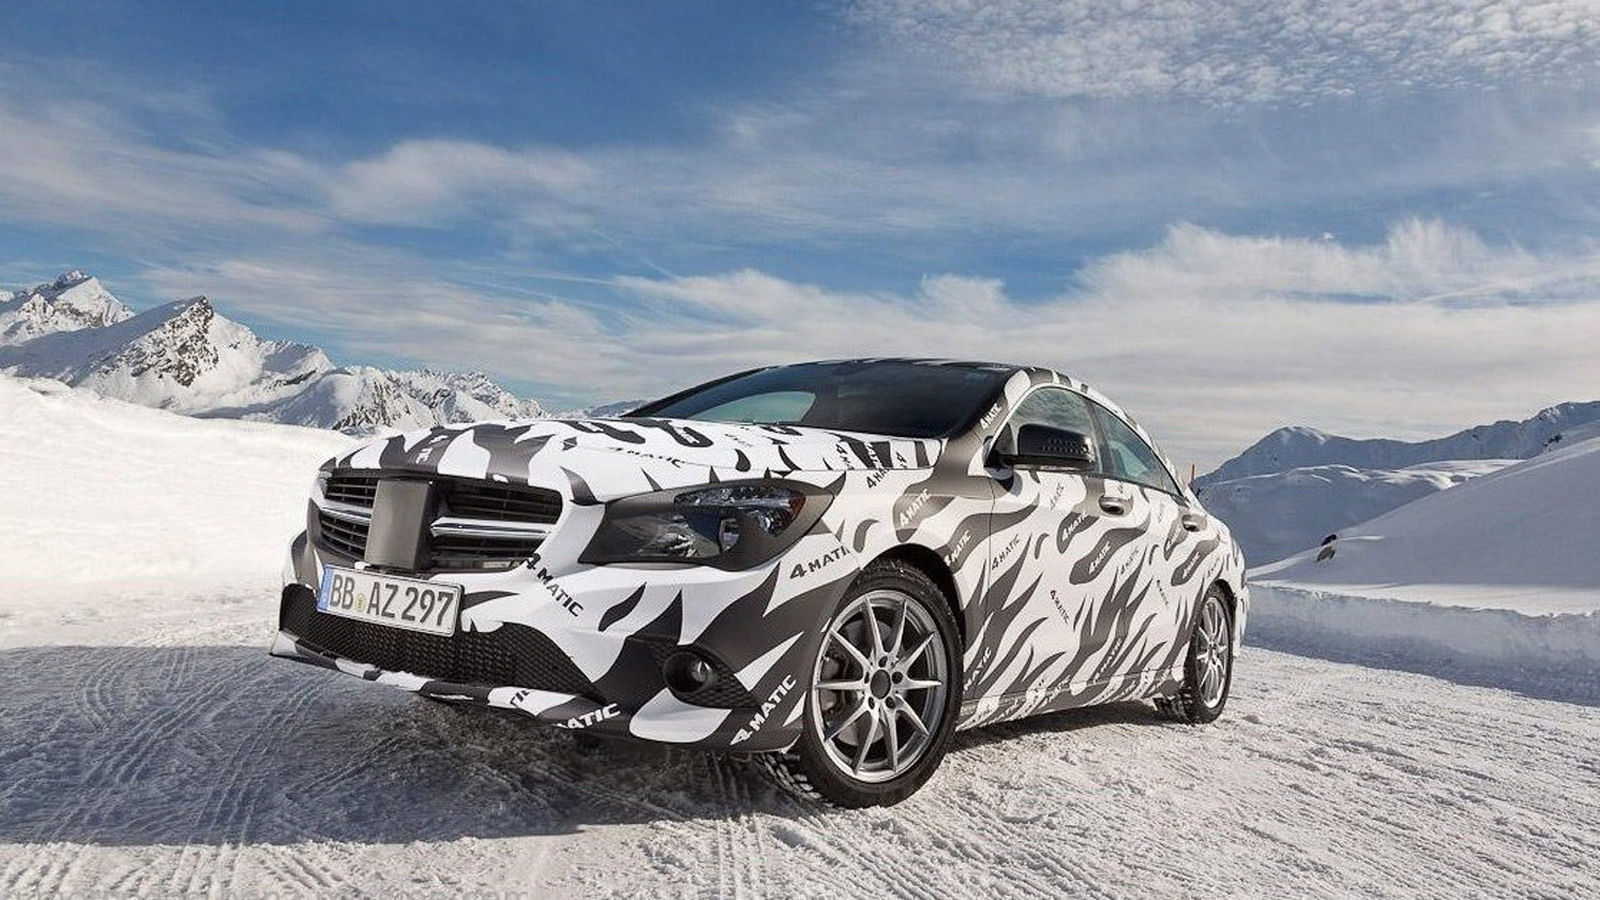 2014 Mercedes-Benz CLA45 AMG teasers